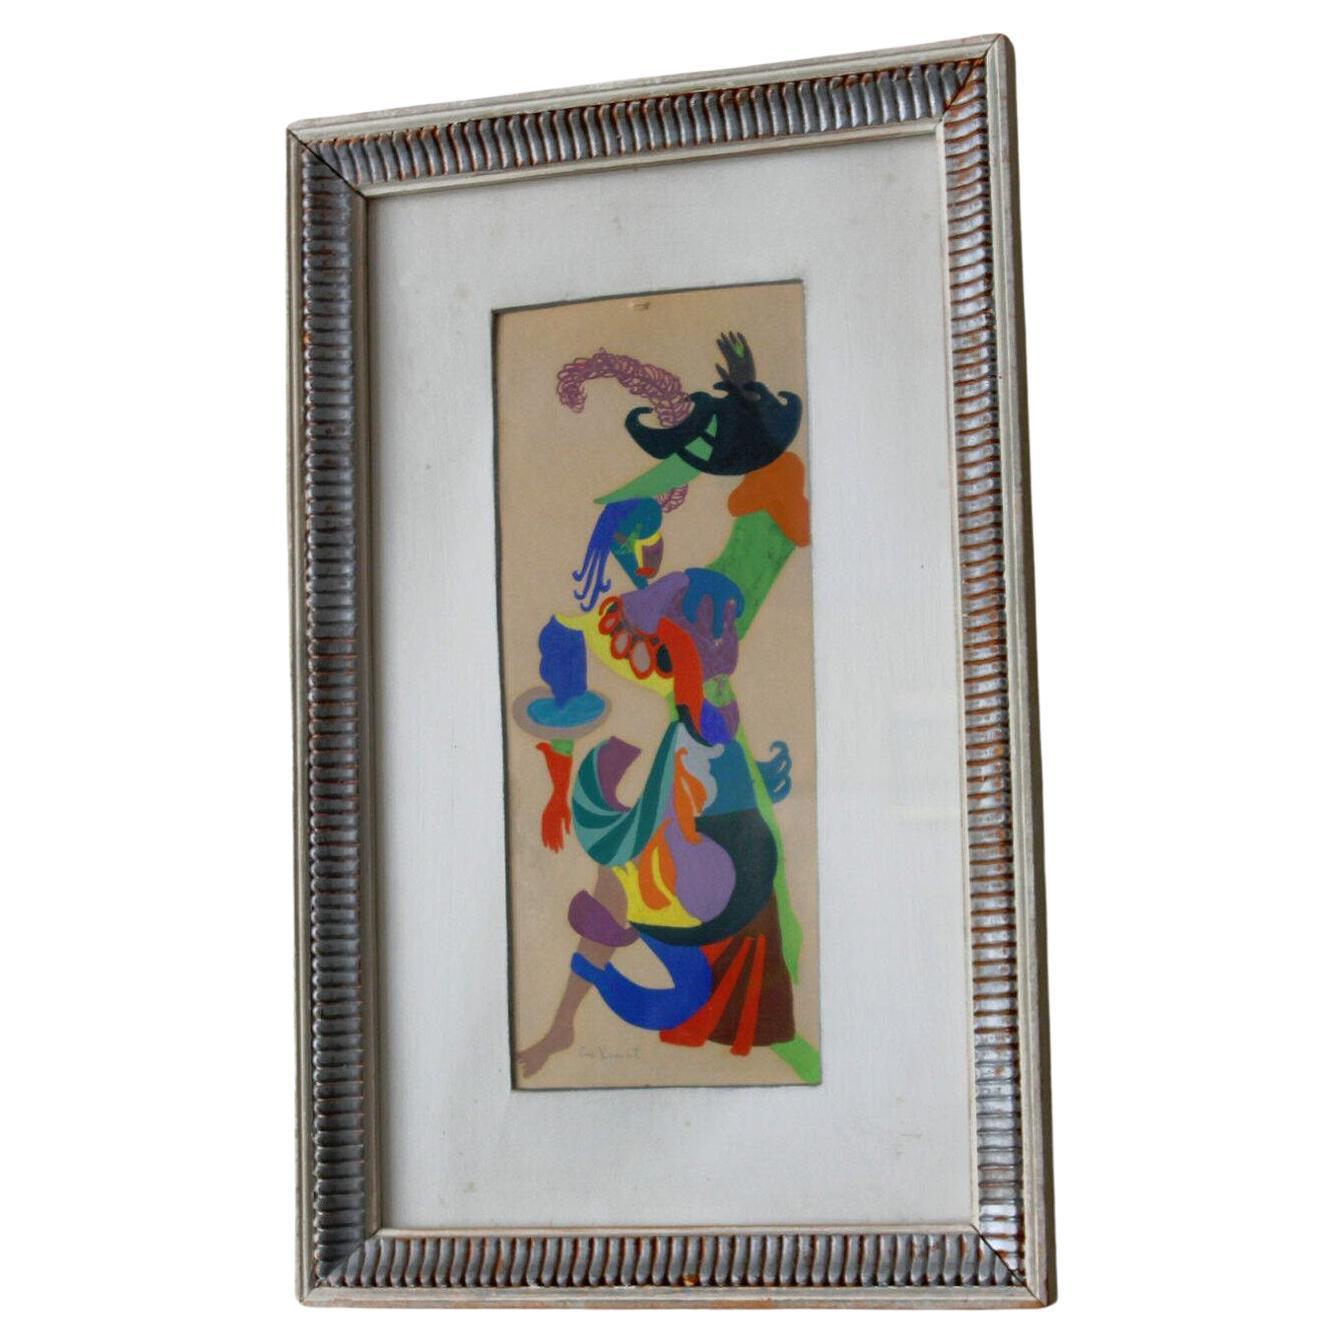  Rare Original BAUHAUS PAINTING! Eva Vincent Moholy Nagy Kandinsky Klee 1920s For Sale